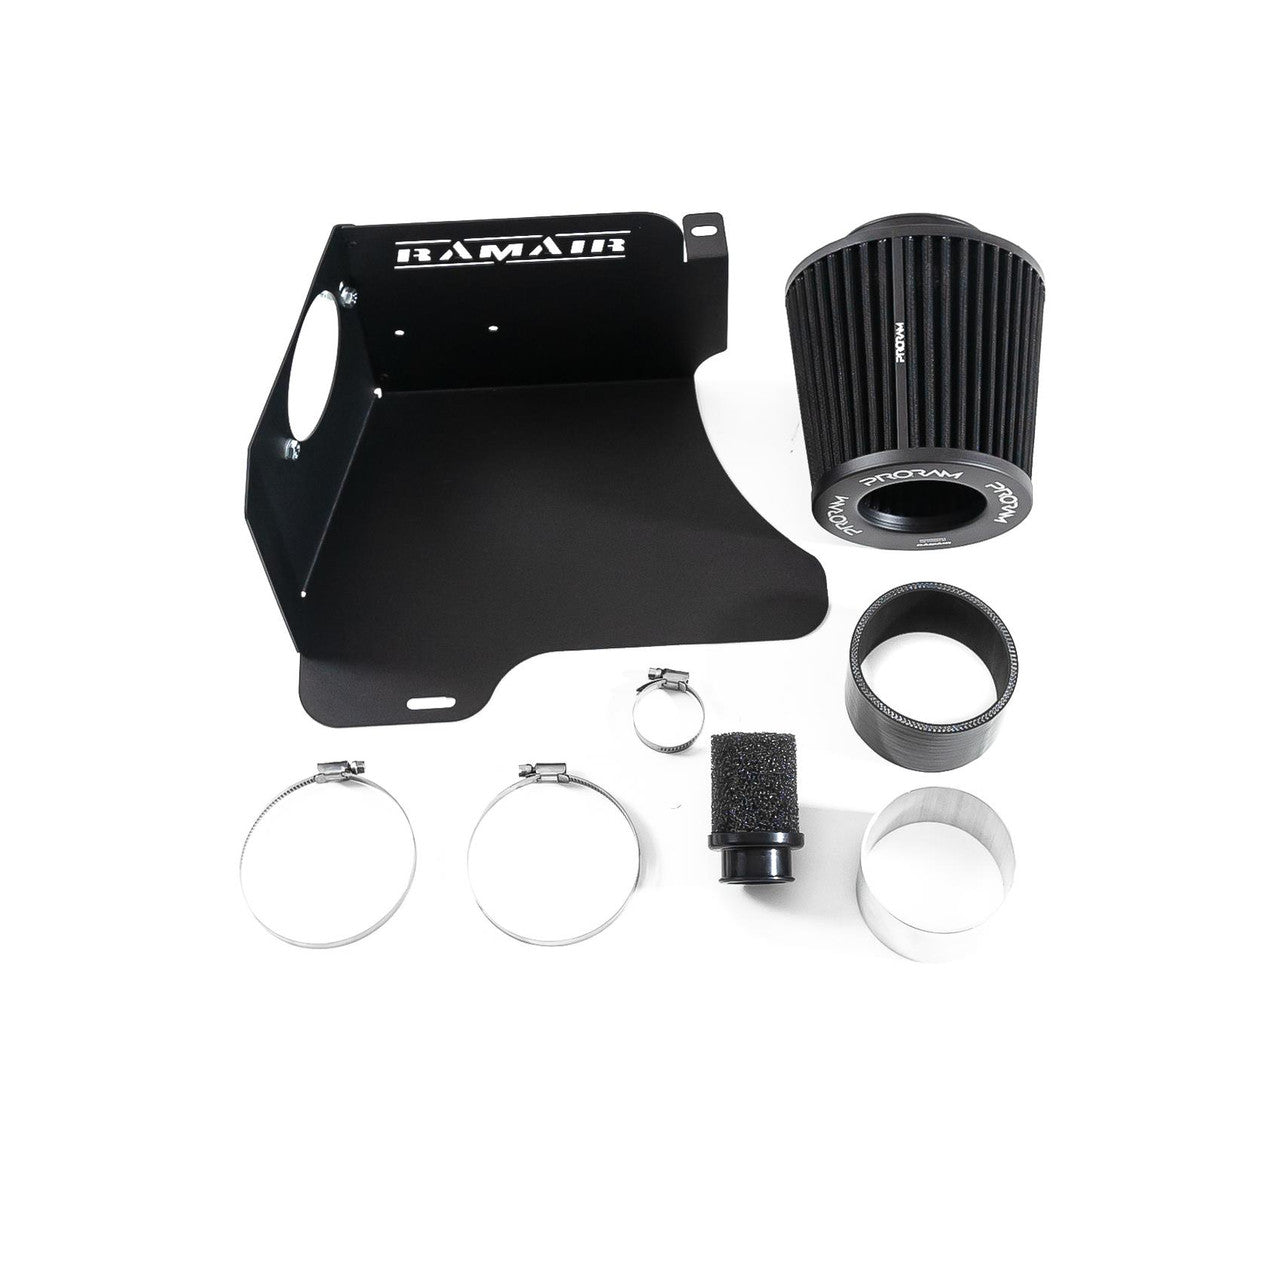 Proram Performance Air Induction Kit for VAG 1.8T 20V Golf,A3,Leon 80mm MAF Ramair-induction kit-carbonizeduk